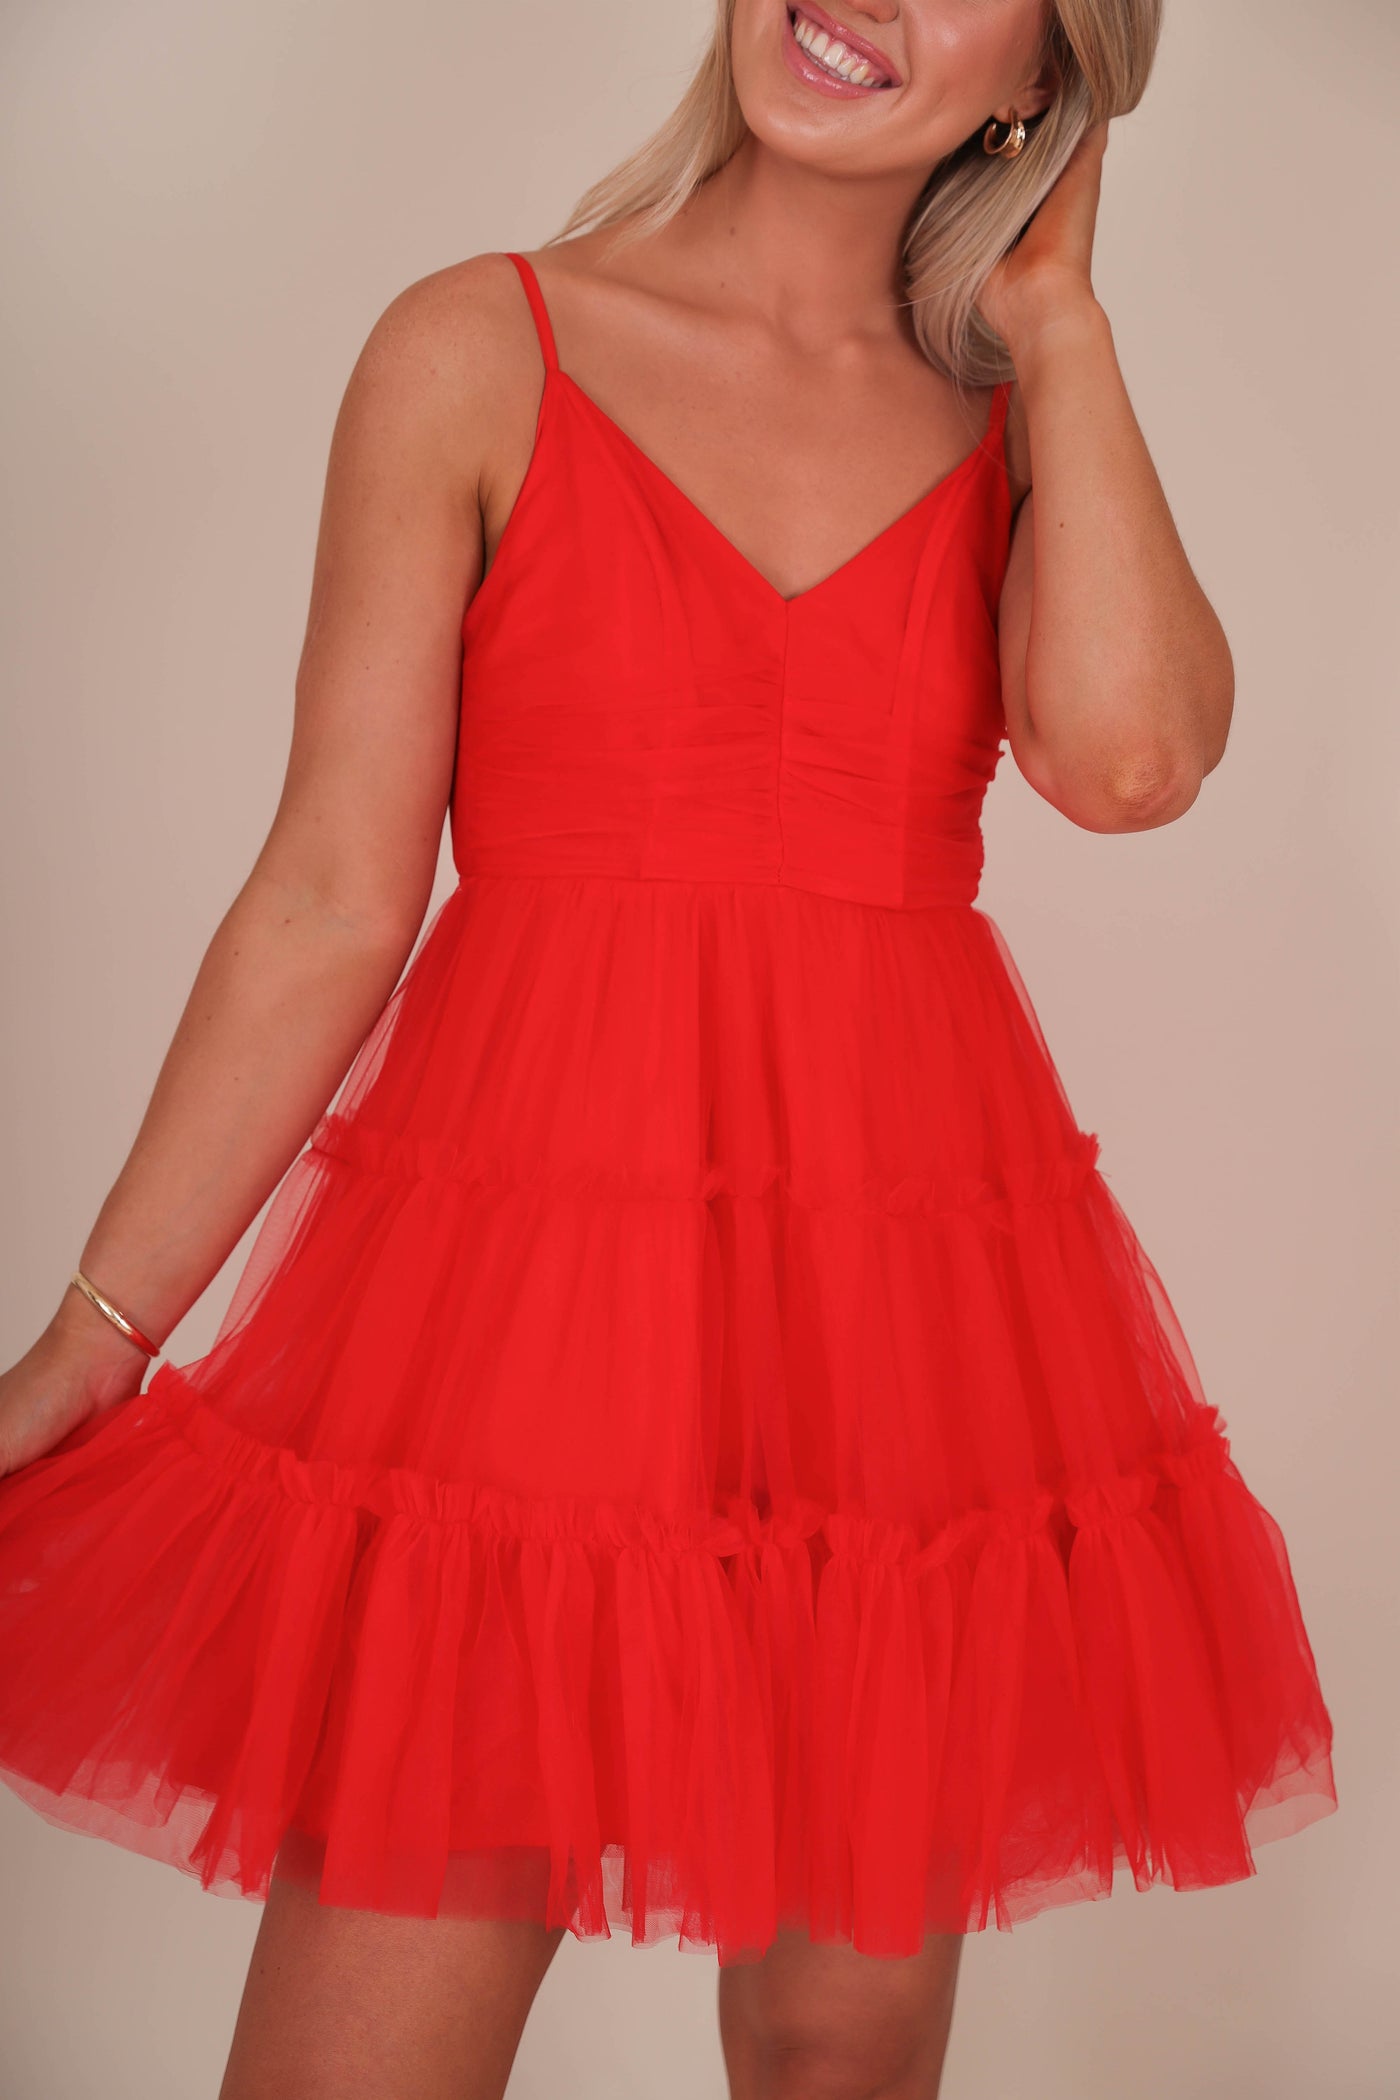 Women's Red Tulle Dress- Women's Red Dress Boutique- Women's Tulle Dresses